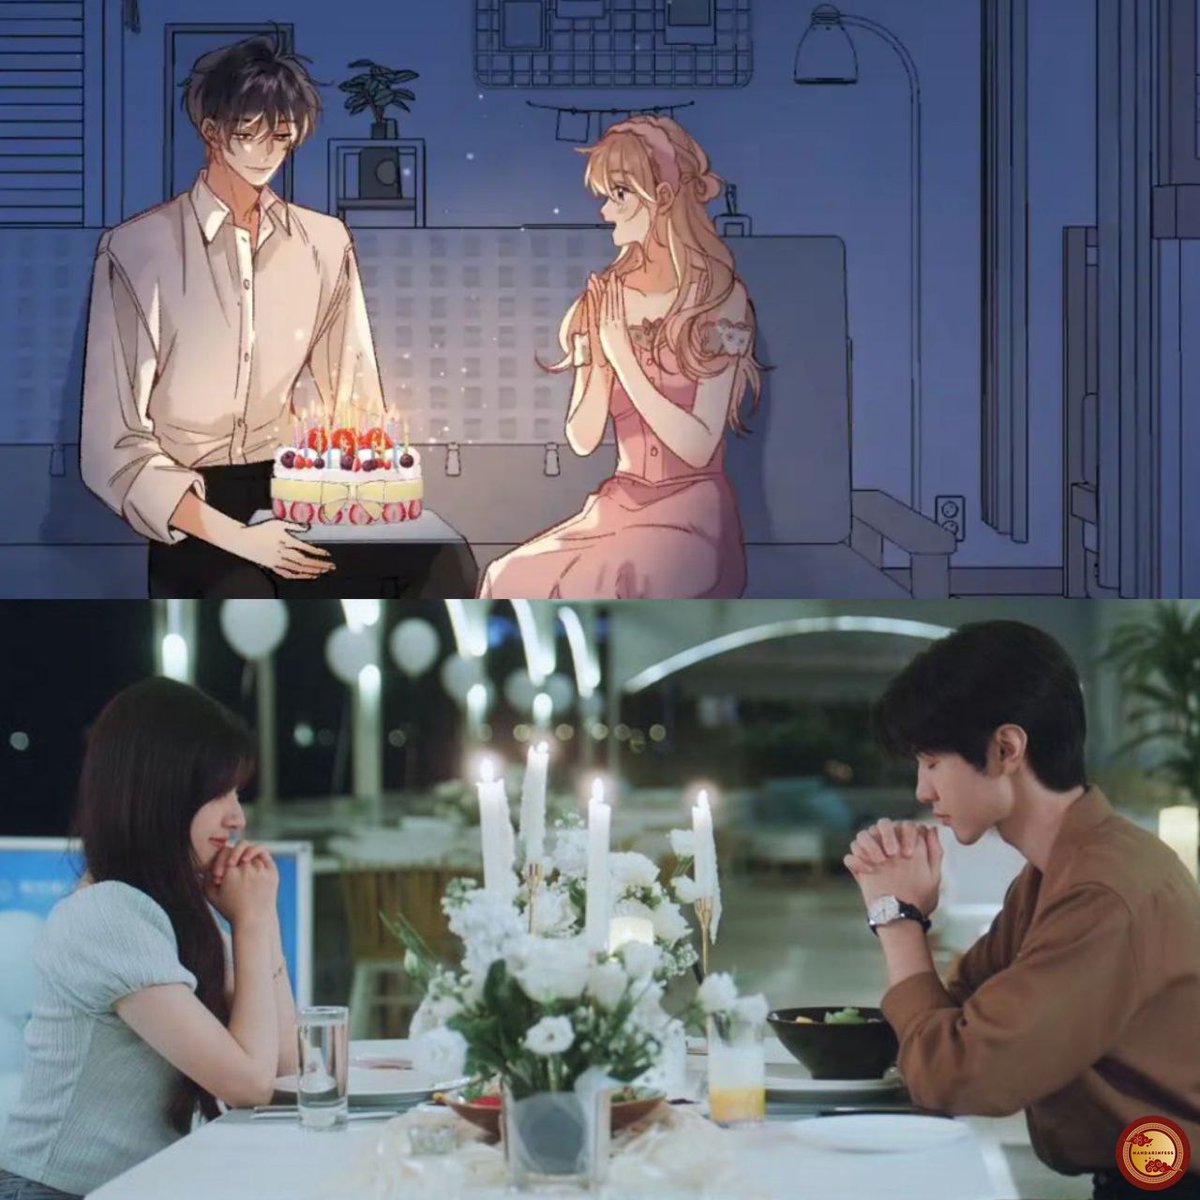 [Nihao] Hidden Love / My Secret Crush manhua

05.07 HAPPY BIRTHDAY DUAN JIAXU 🥳